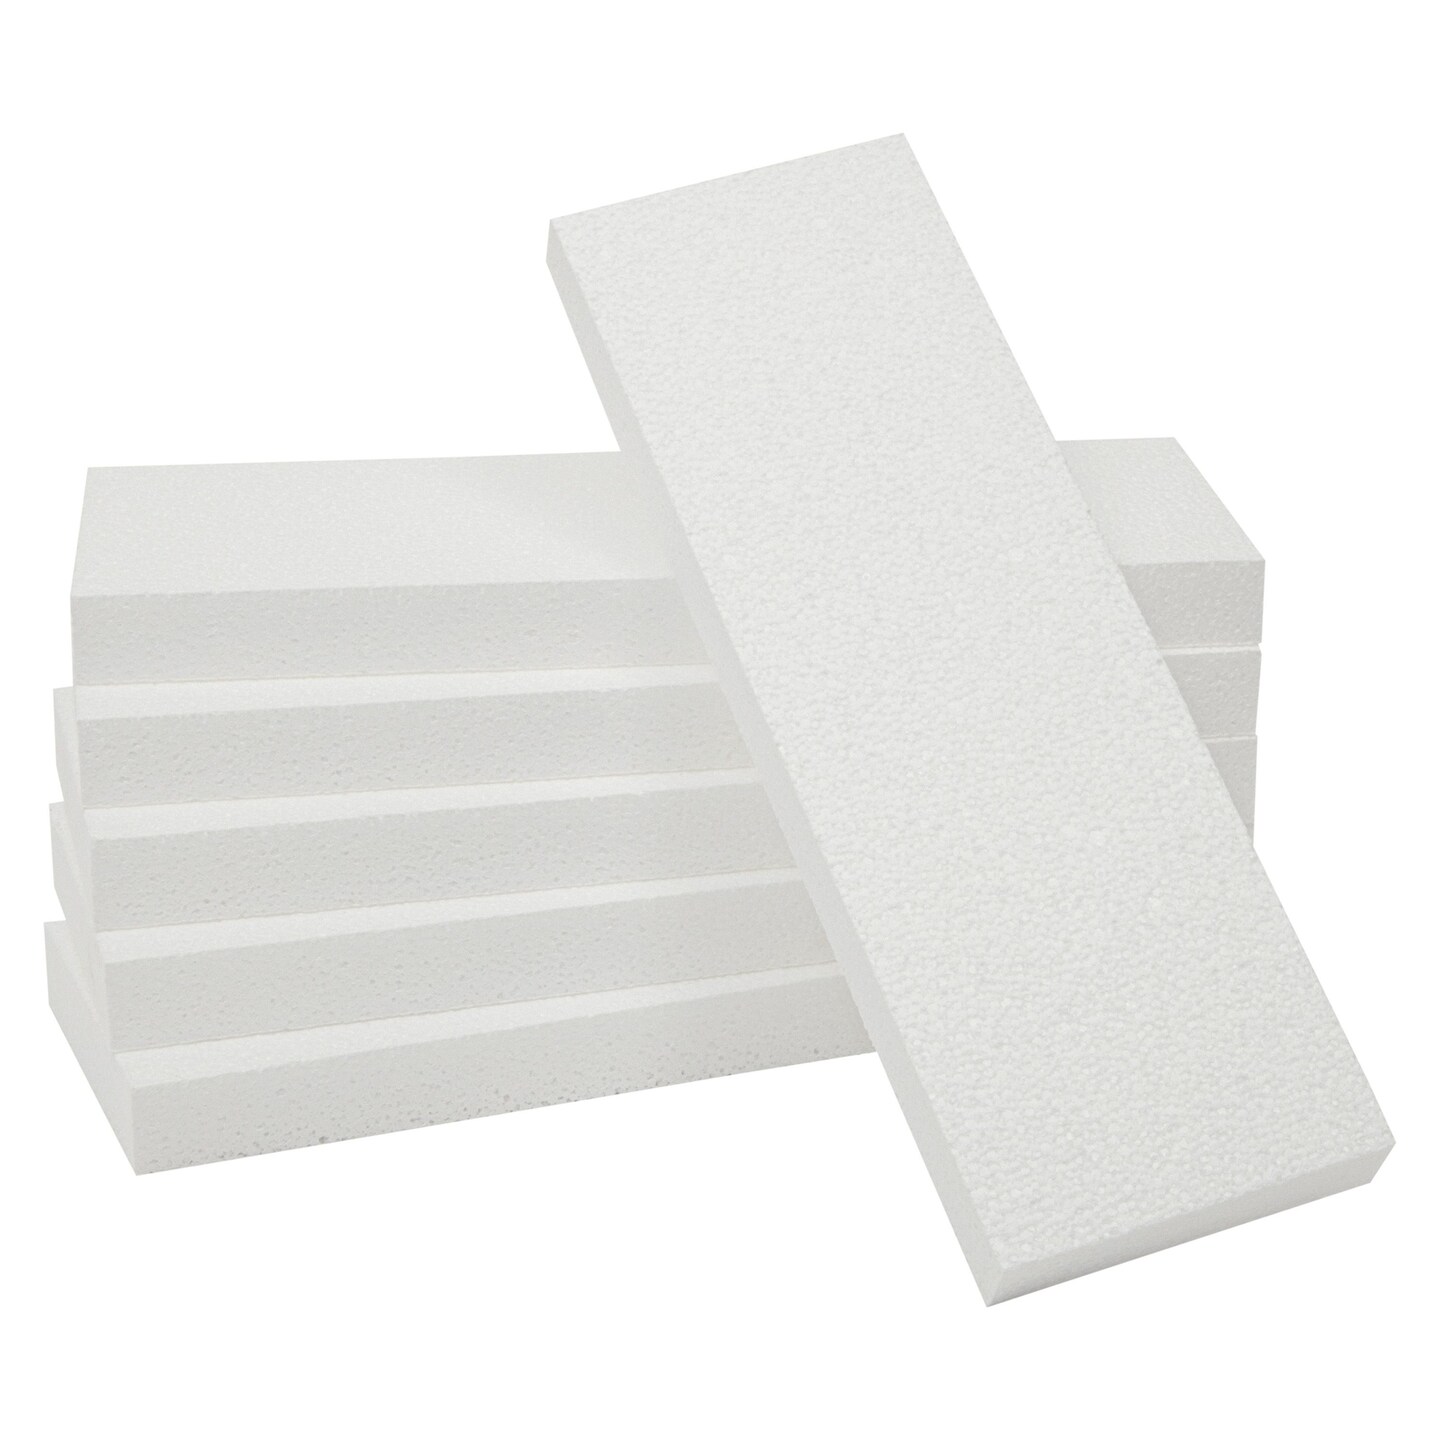 Foam Rectangles for Crafts (12 x 6 x 1 In, 6 Pack)  Foam crafts, Arts and  crafts supplies, Foam blocks